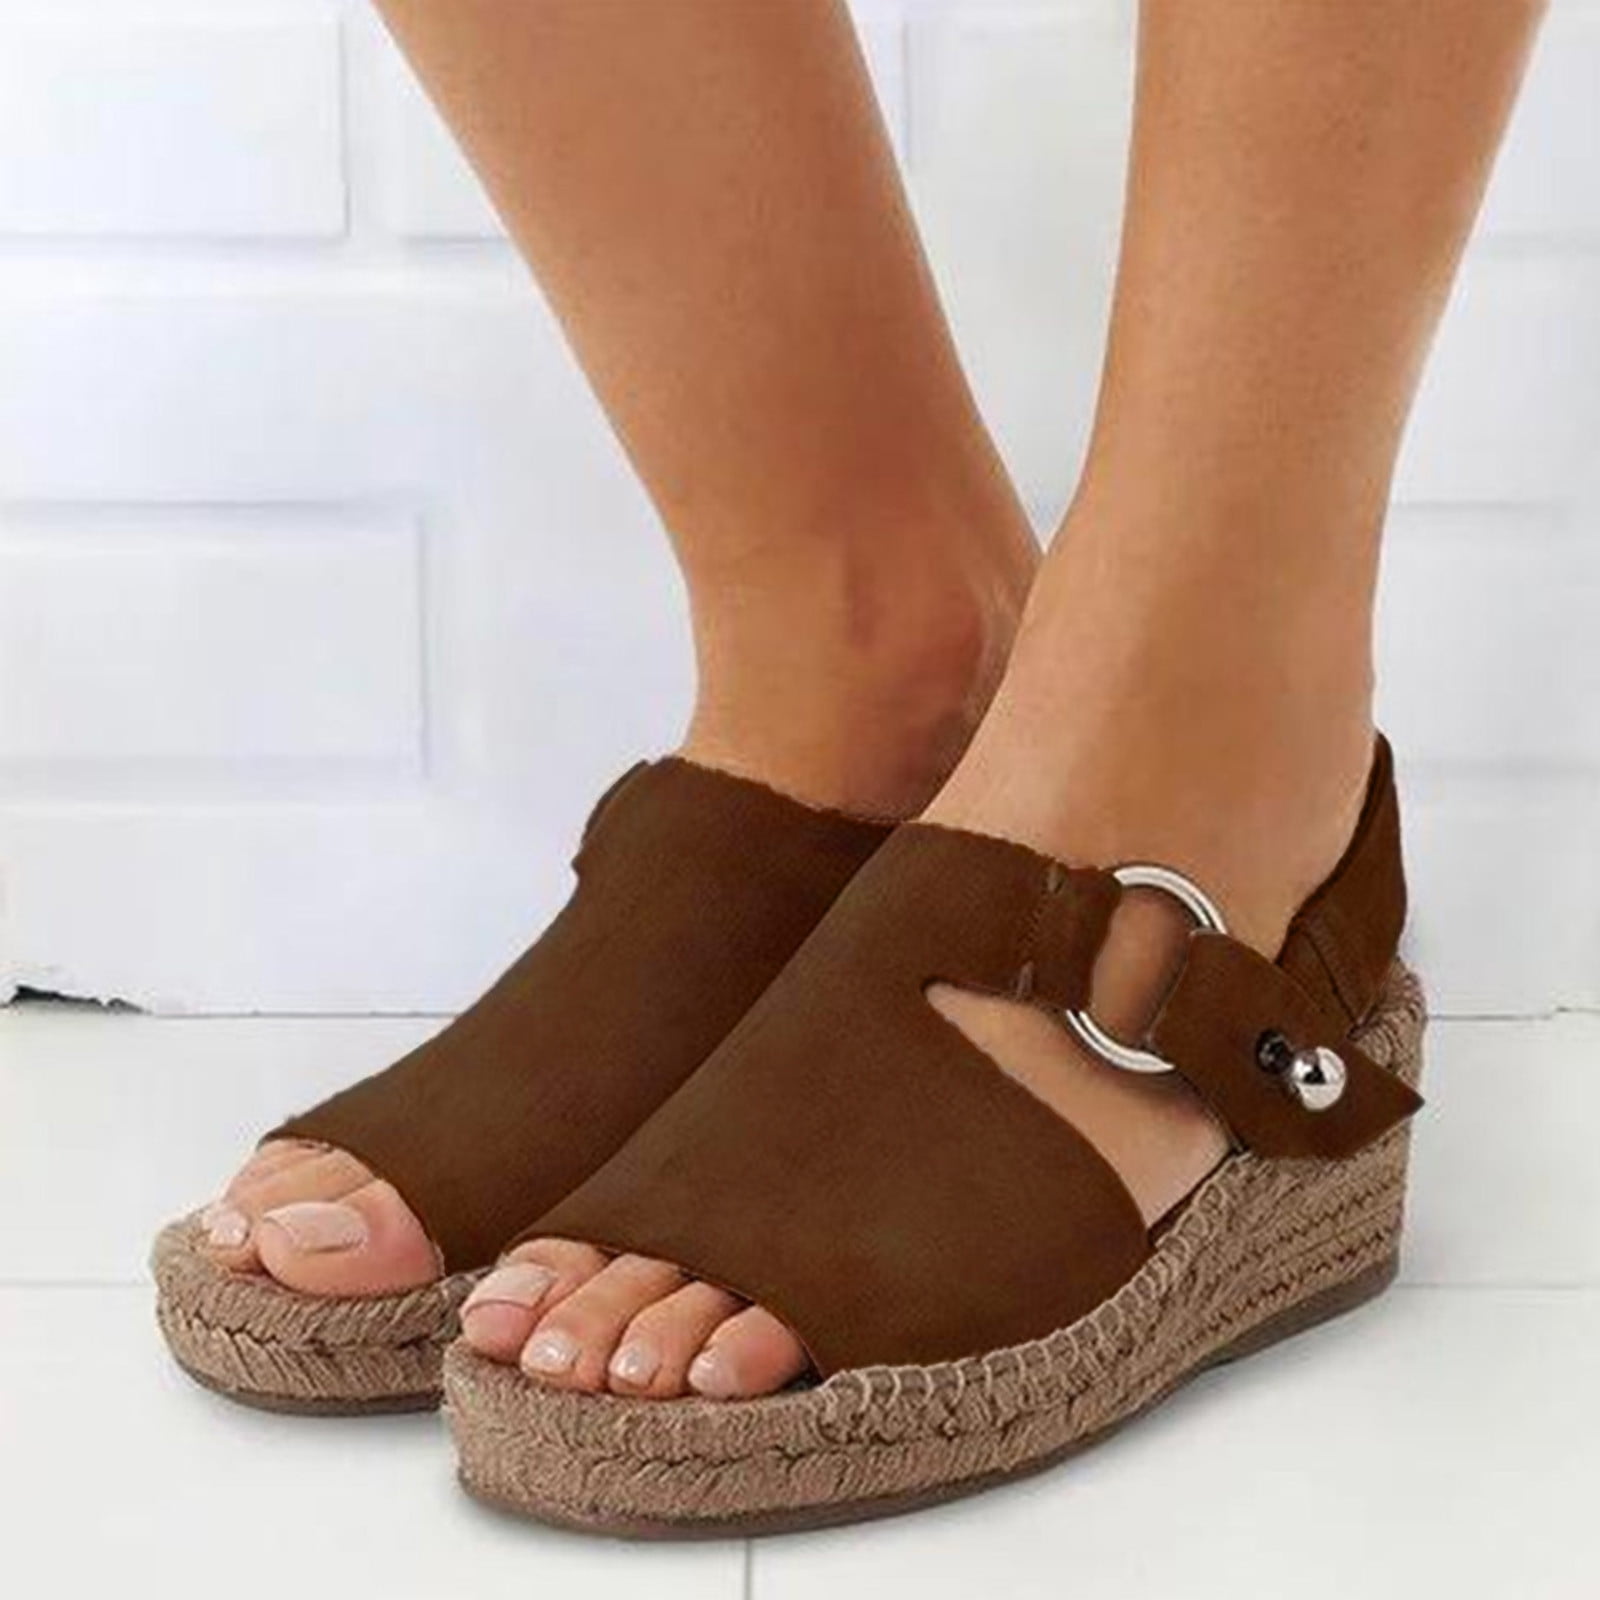 Midress Womens Ankle Strap Open Toe Summer Flatform Sandal Espadrilles Sandals Bohemian Hemp Rope Weaving Platform Wedges 